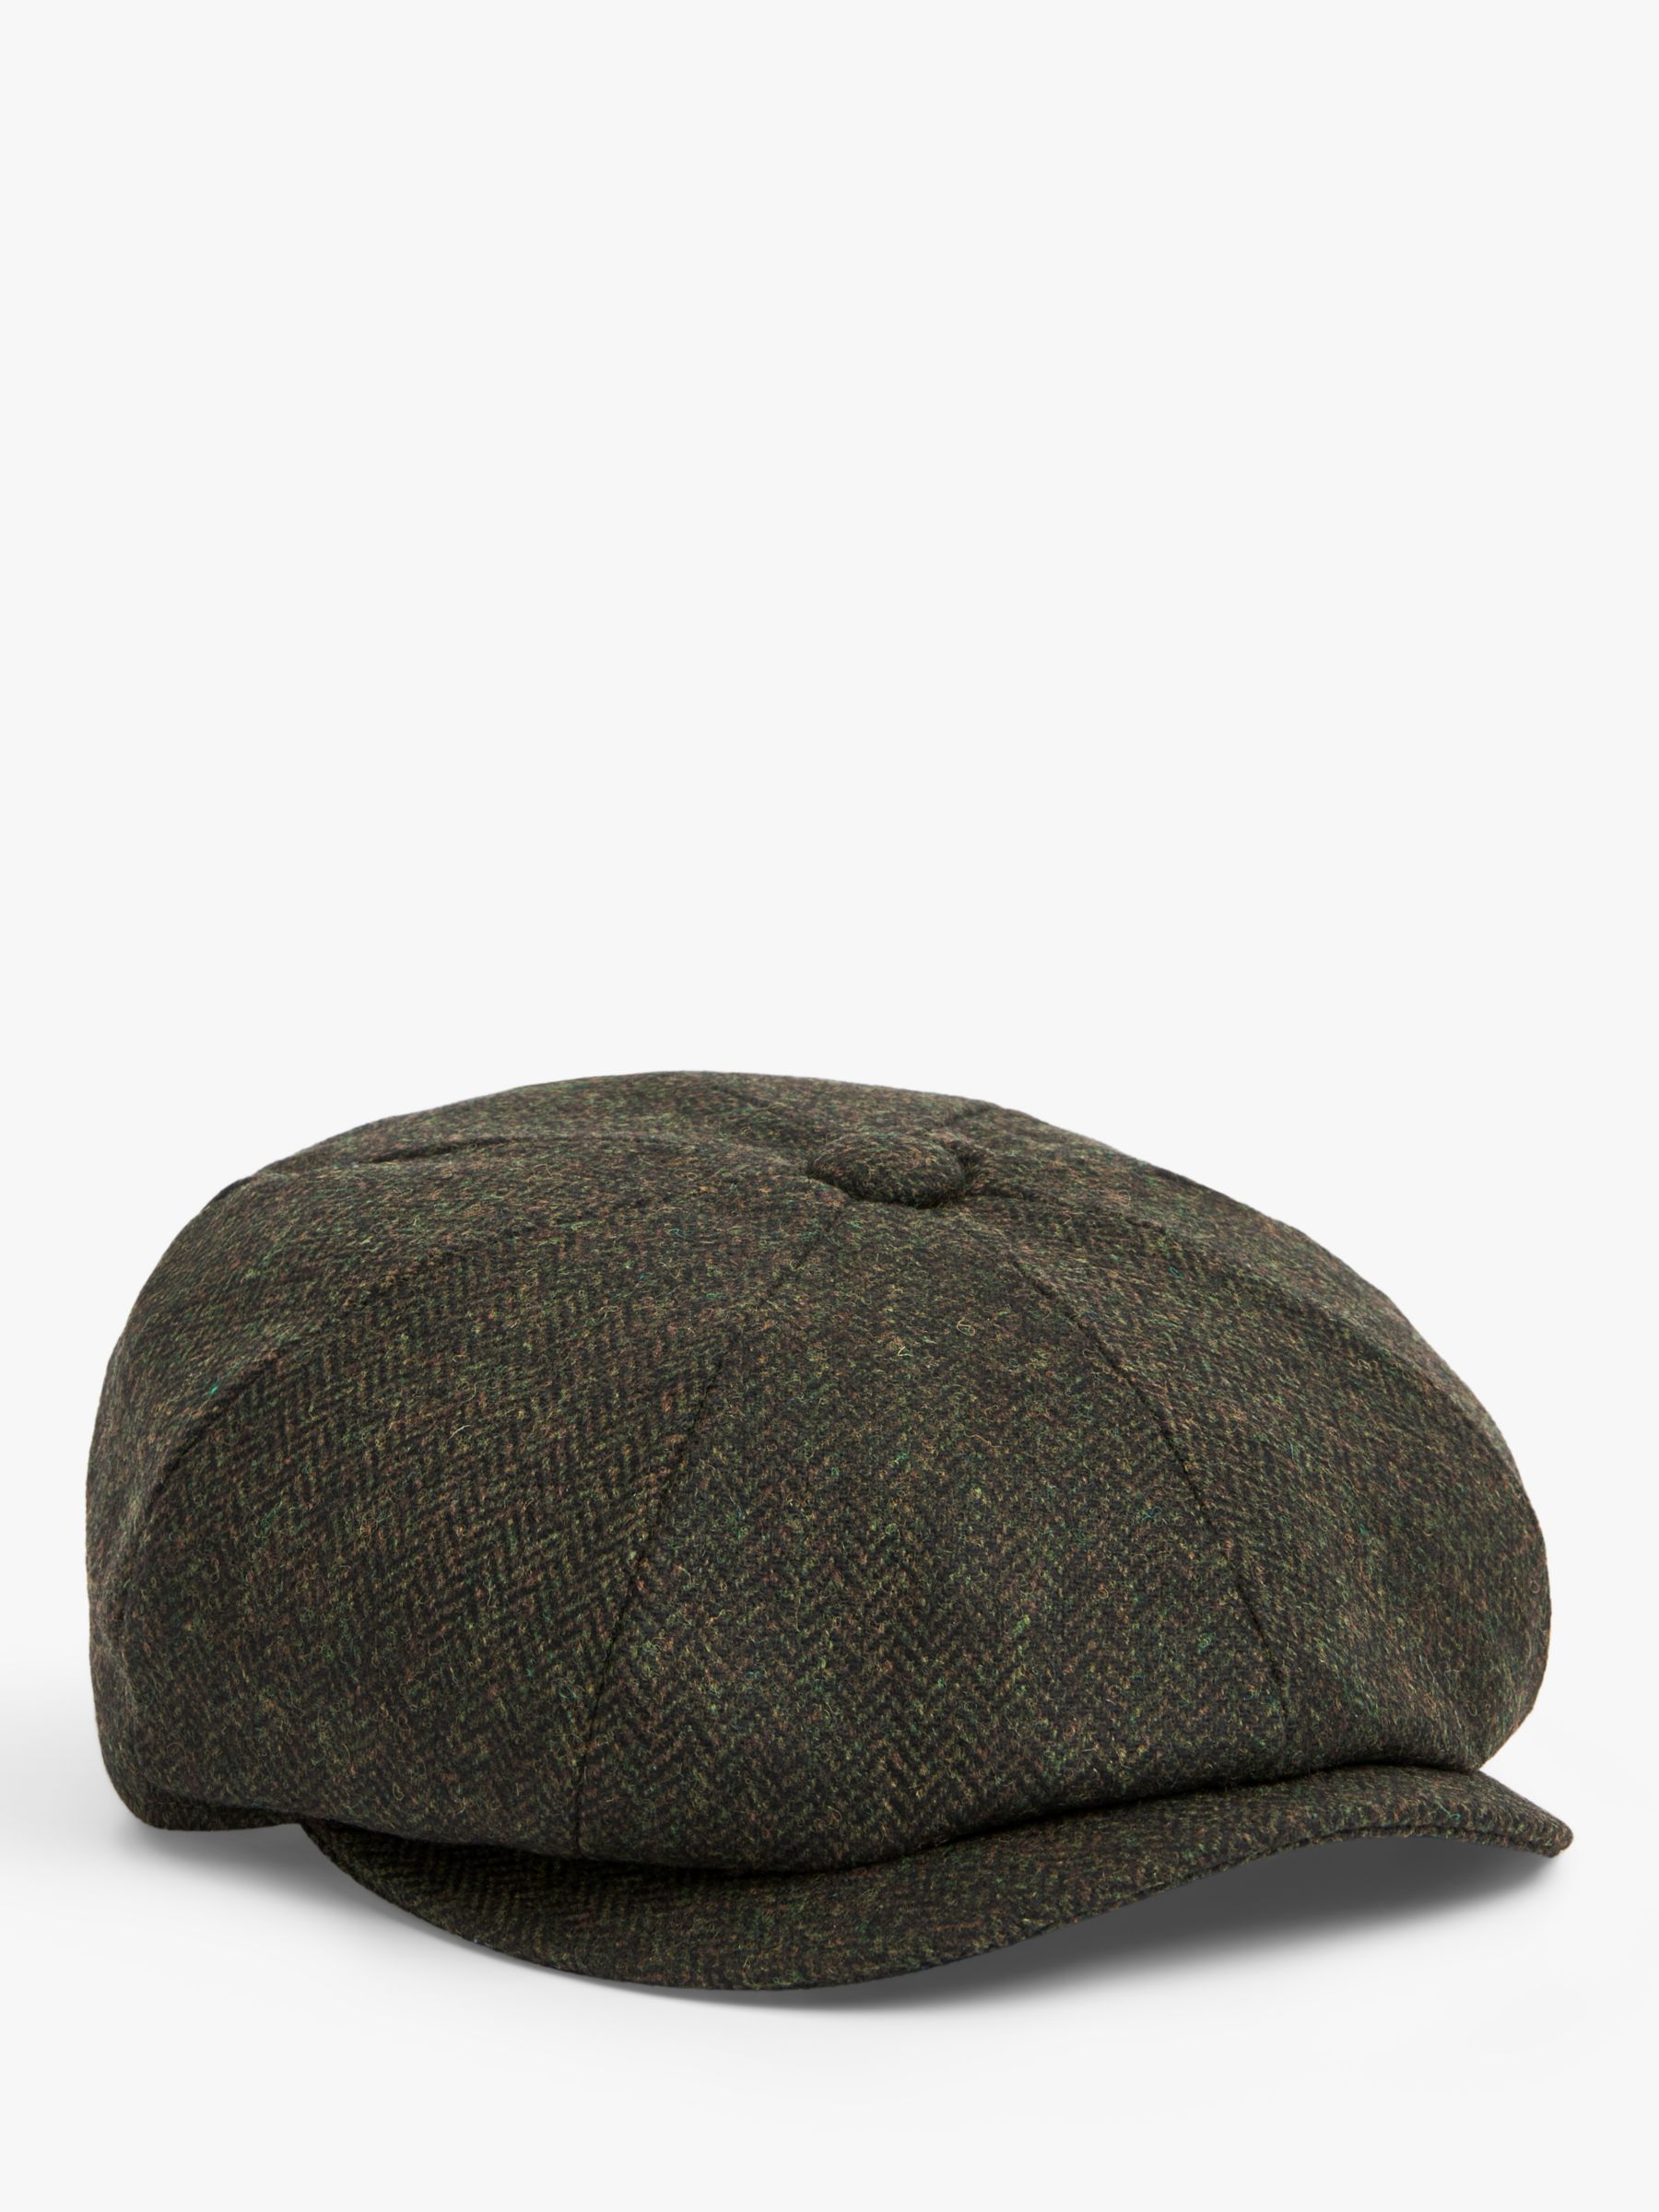 John Lewis Moon Merino Wool Herringbone Baker Boy Hat, Dark Green